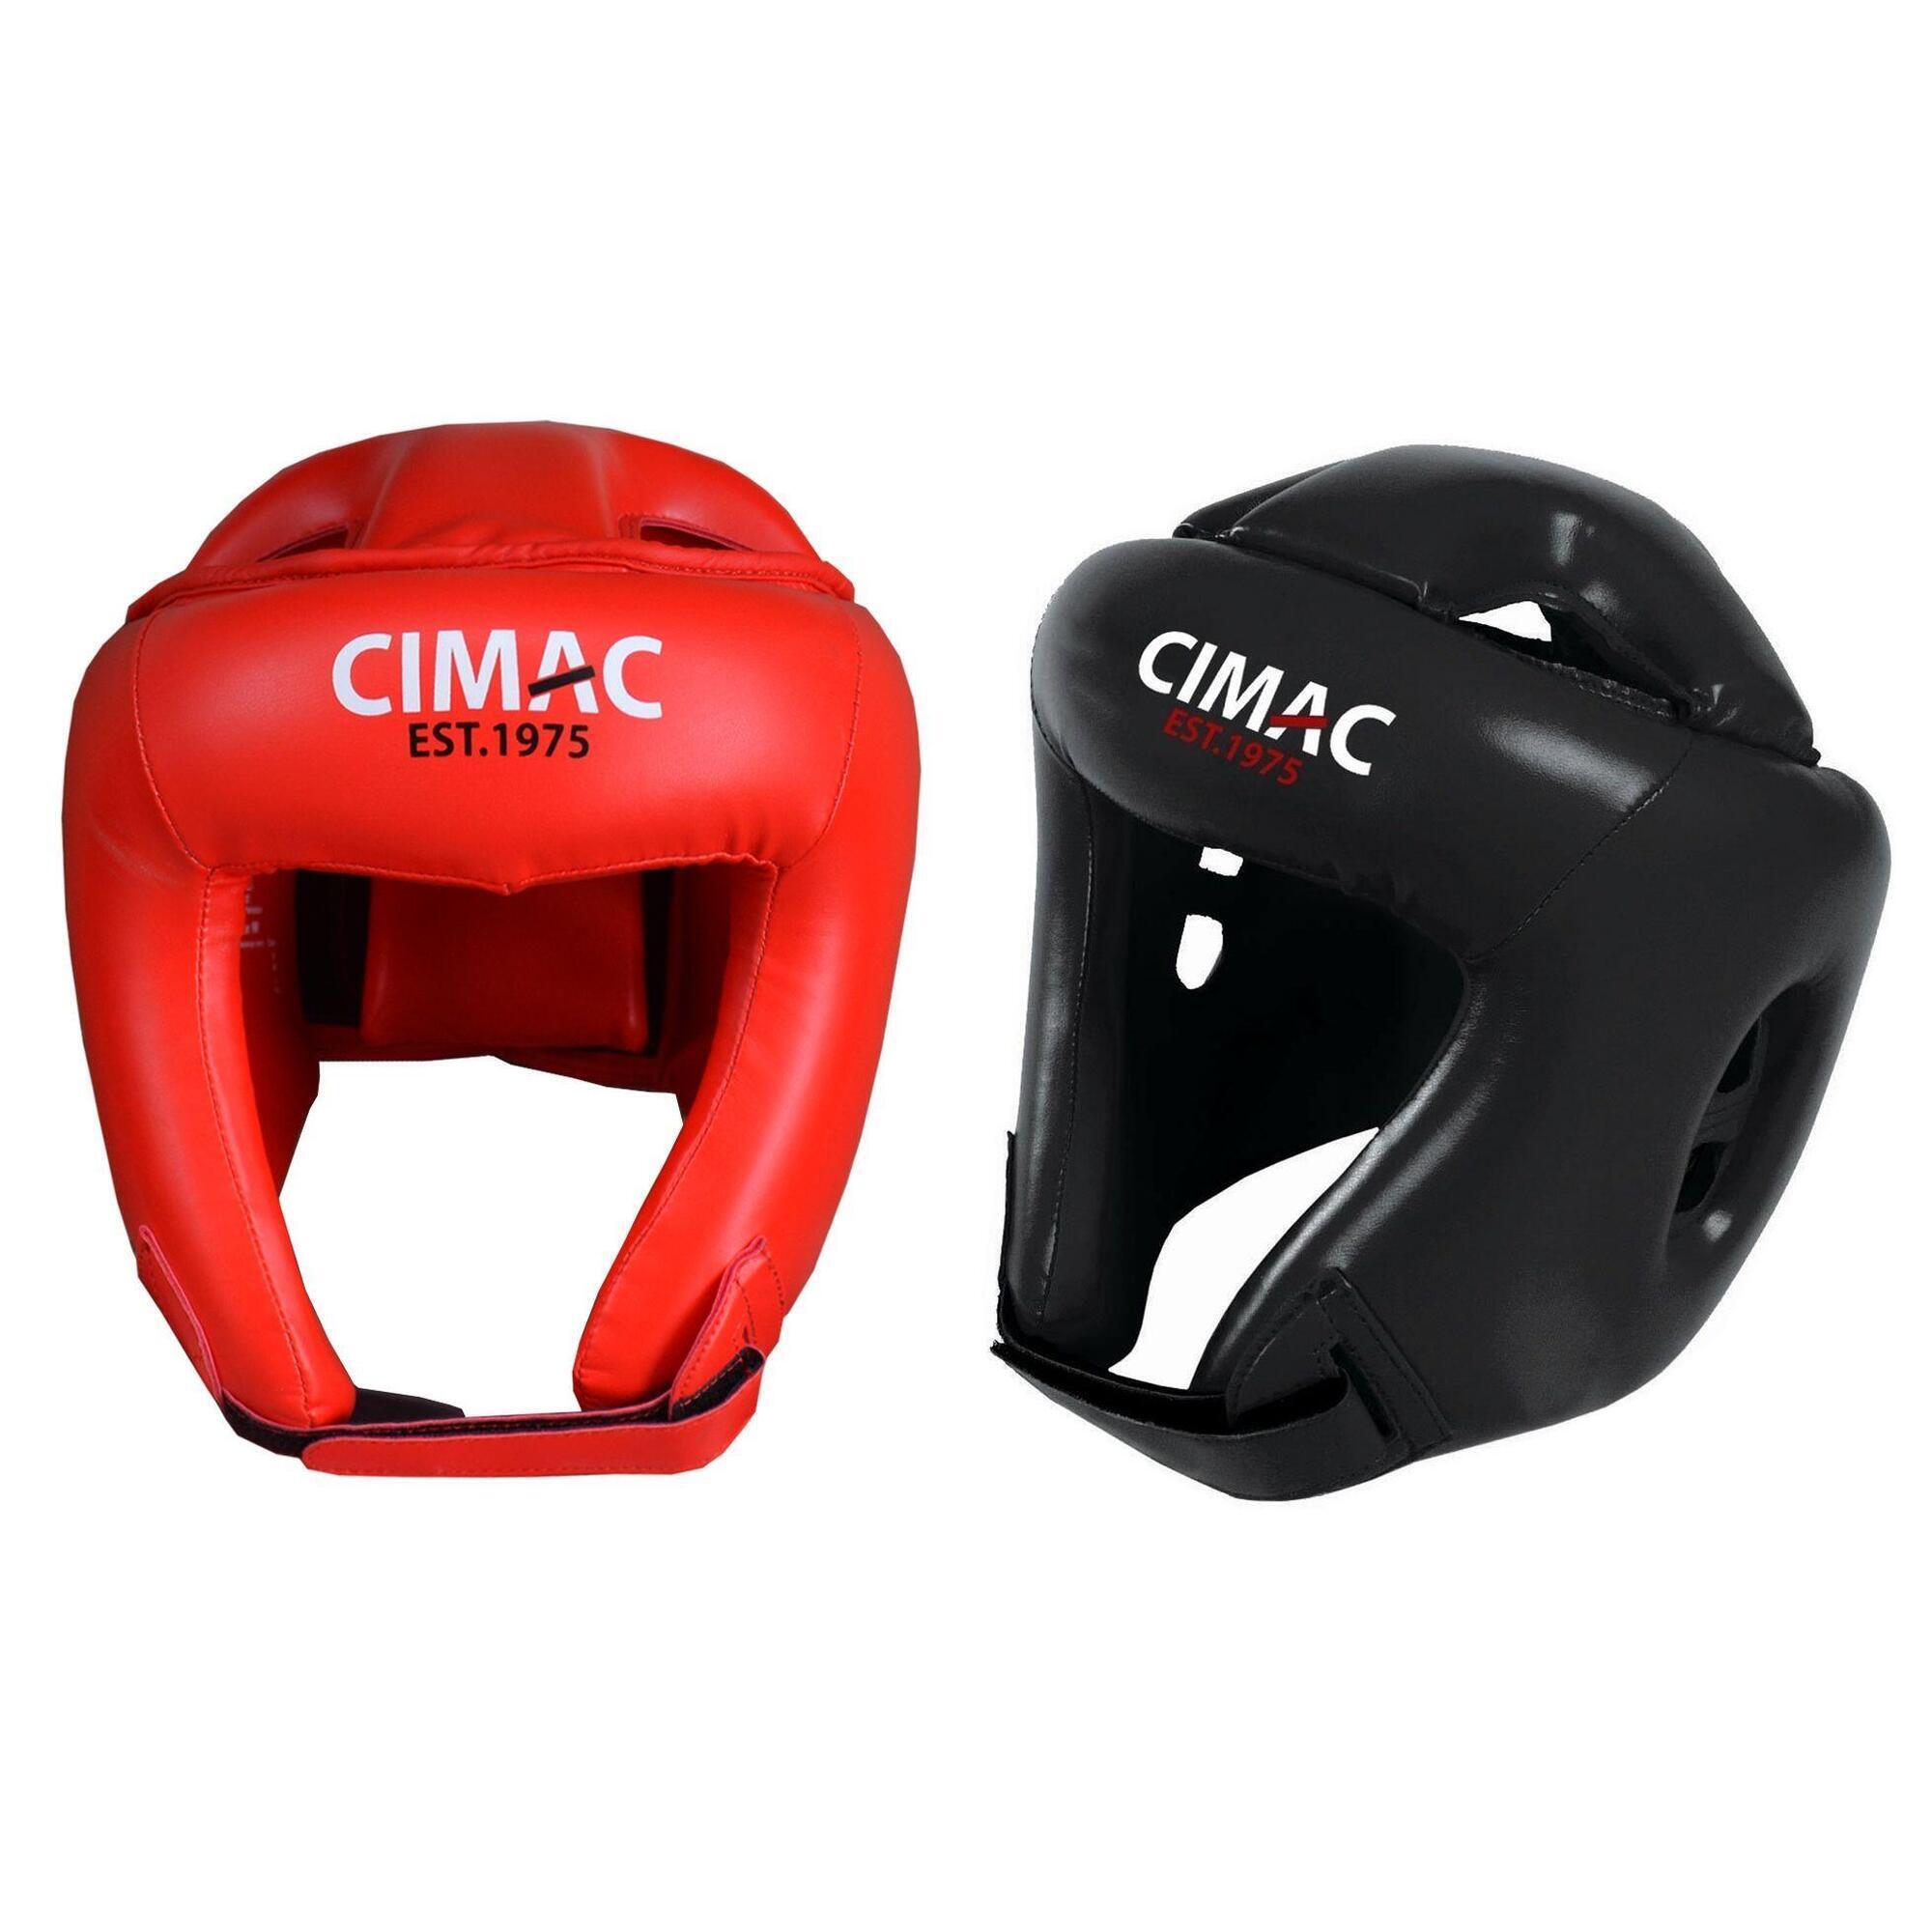 CIMAC Cimac Open Face Boxing Head Guard